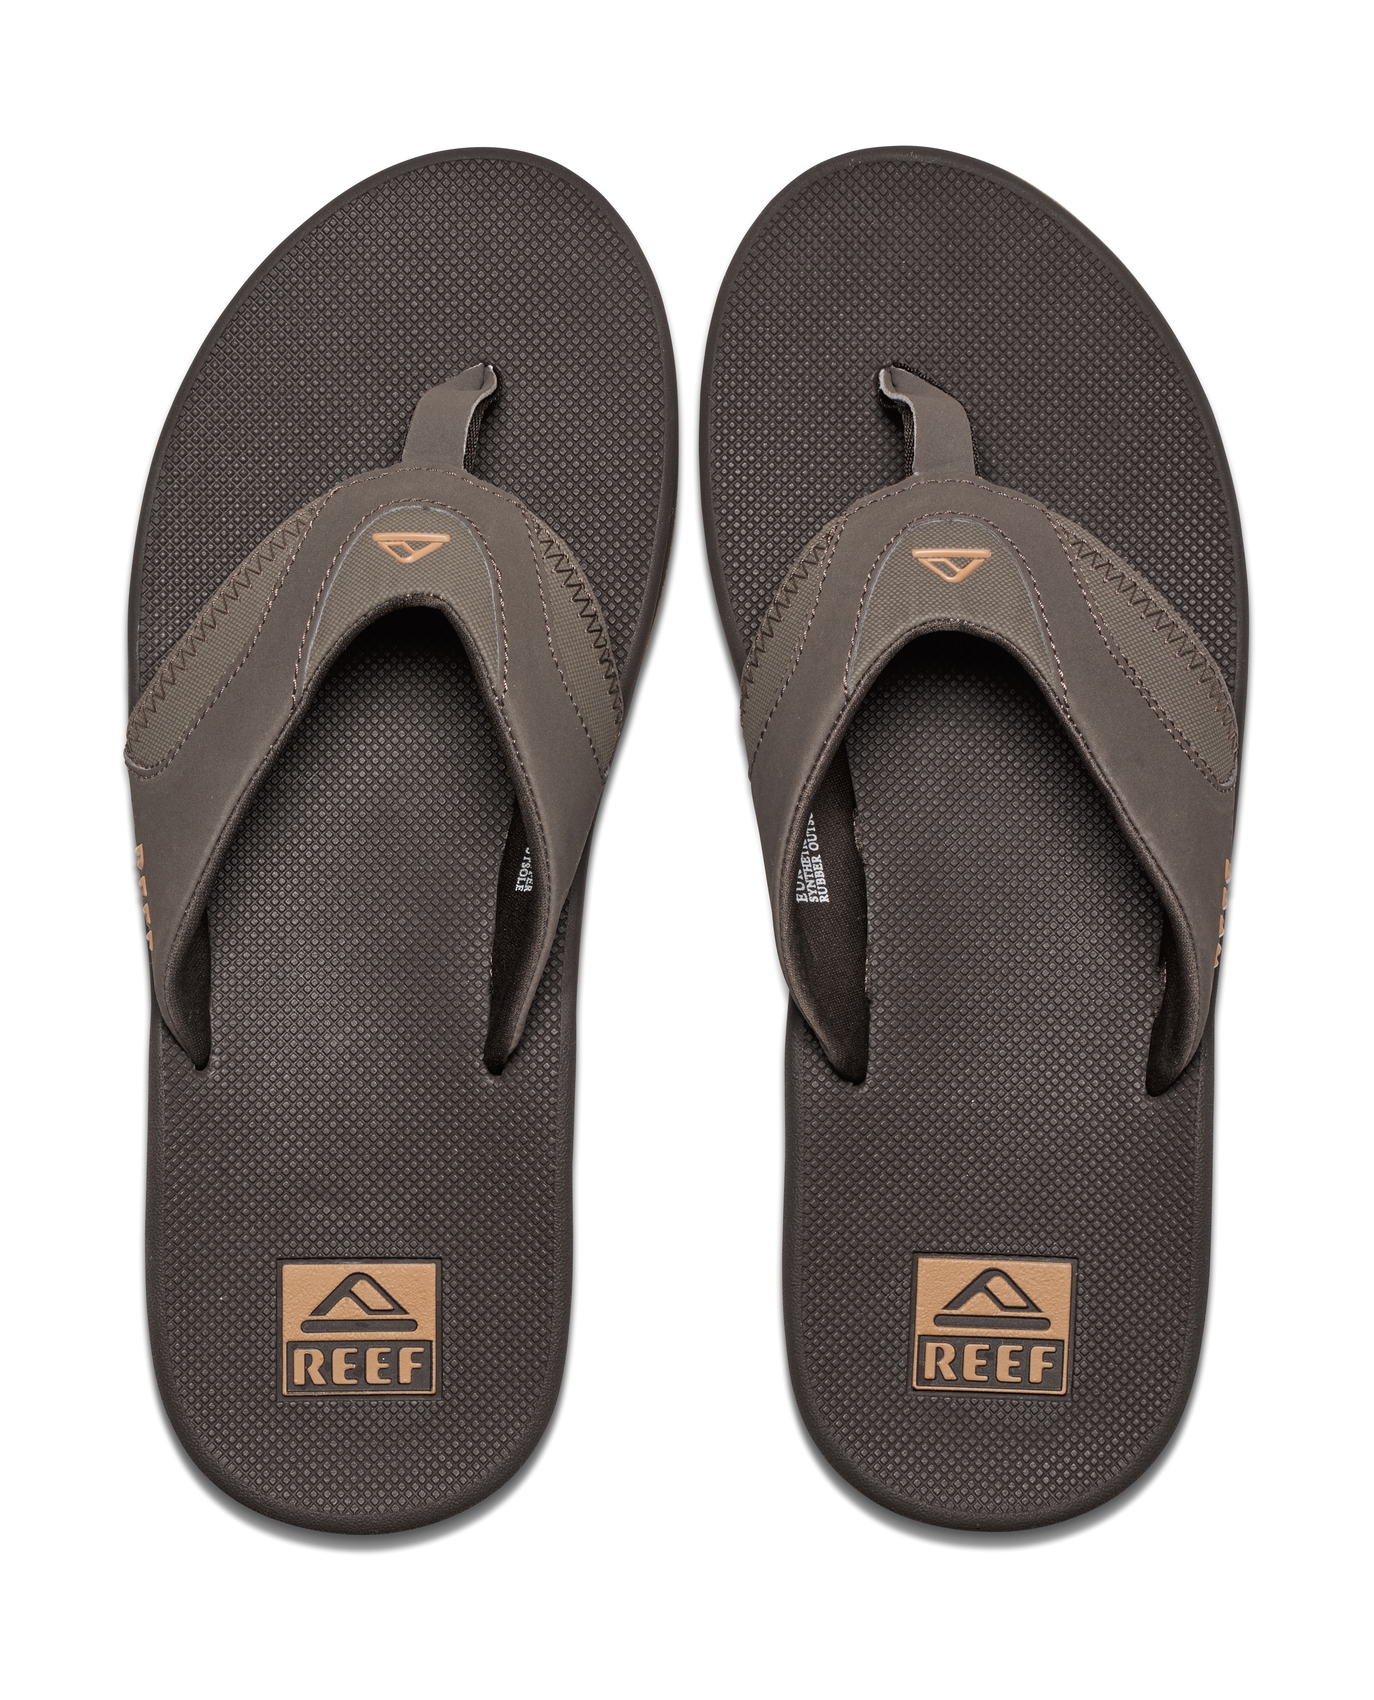 Reef Men's Sandal Fanning, Bottle Opener Flip Flops, Brown/Gum, 5 - image 2 of 2